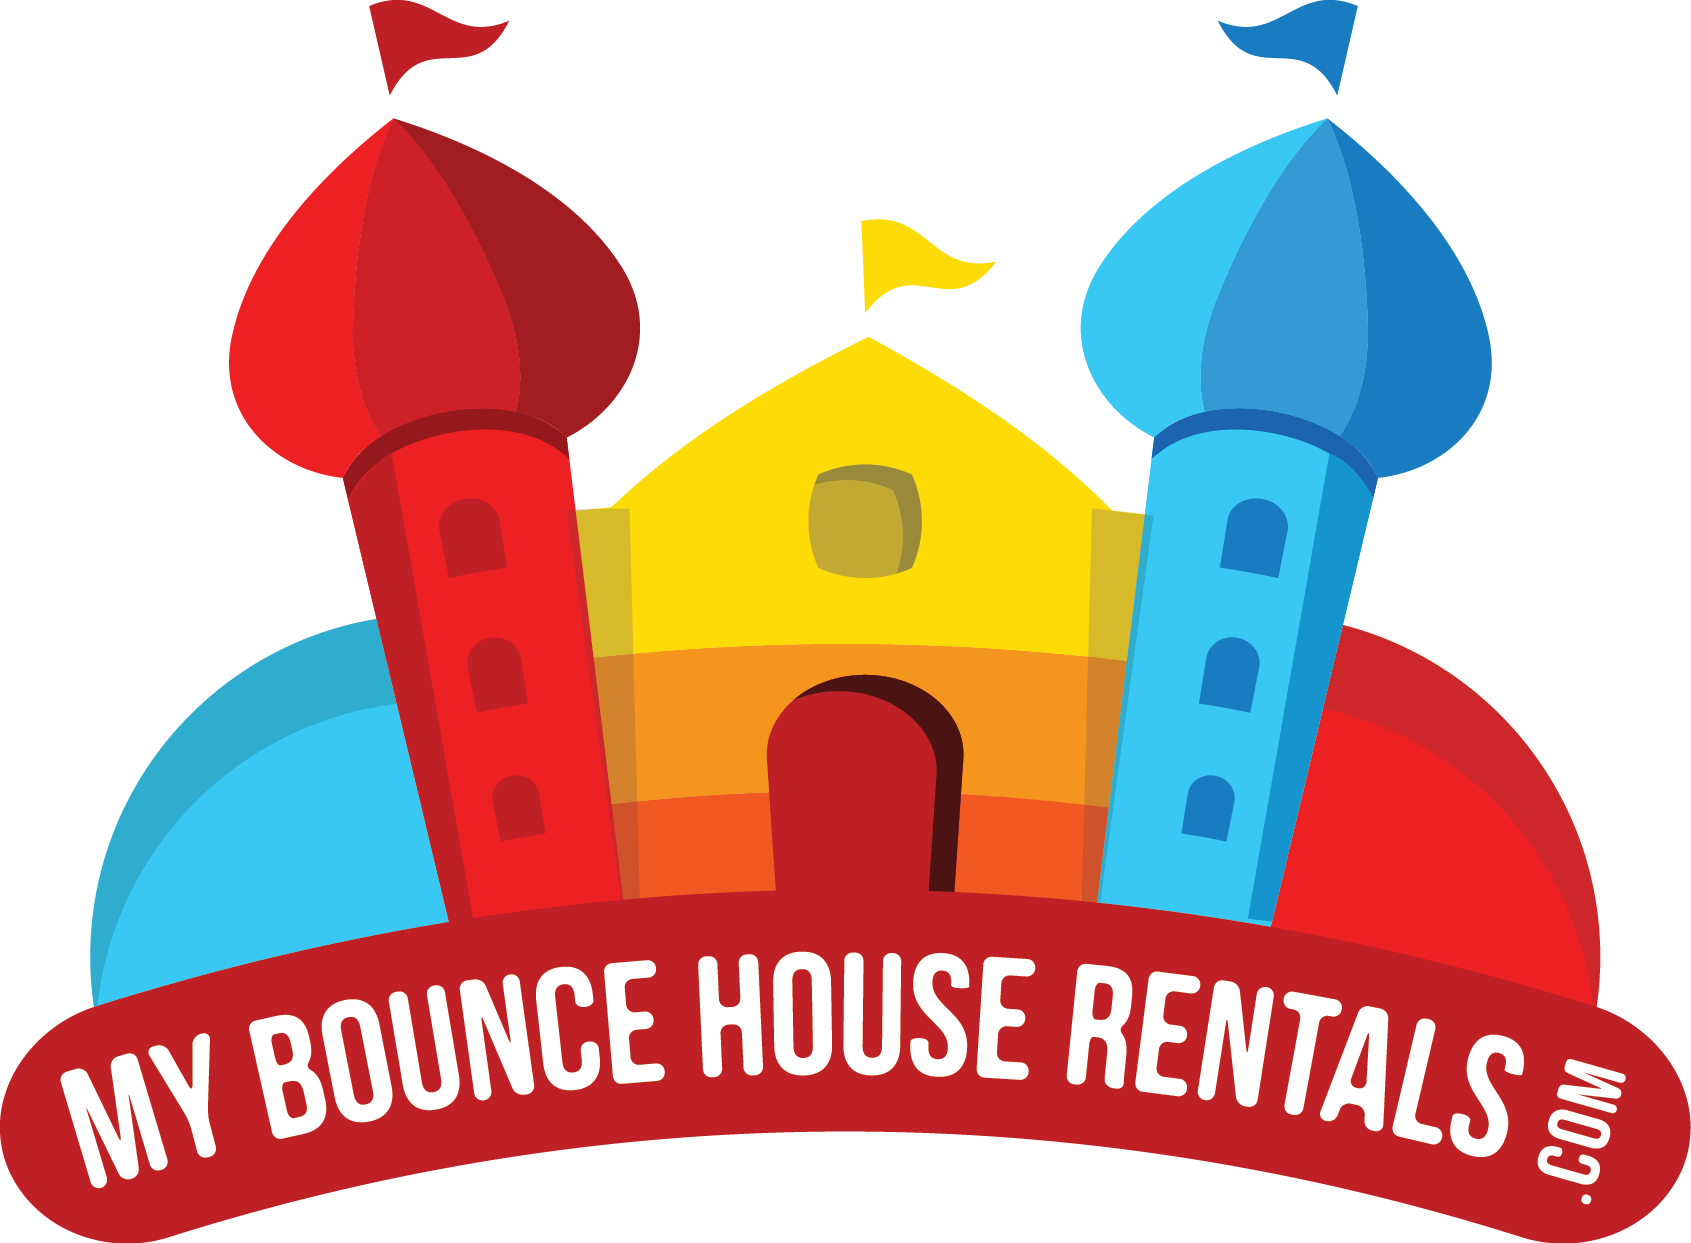 My bounce house rentals of newark's Logo